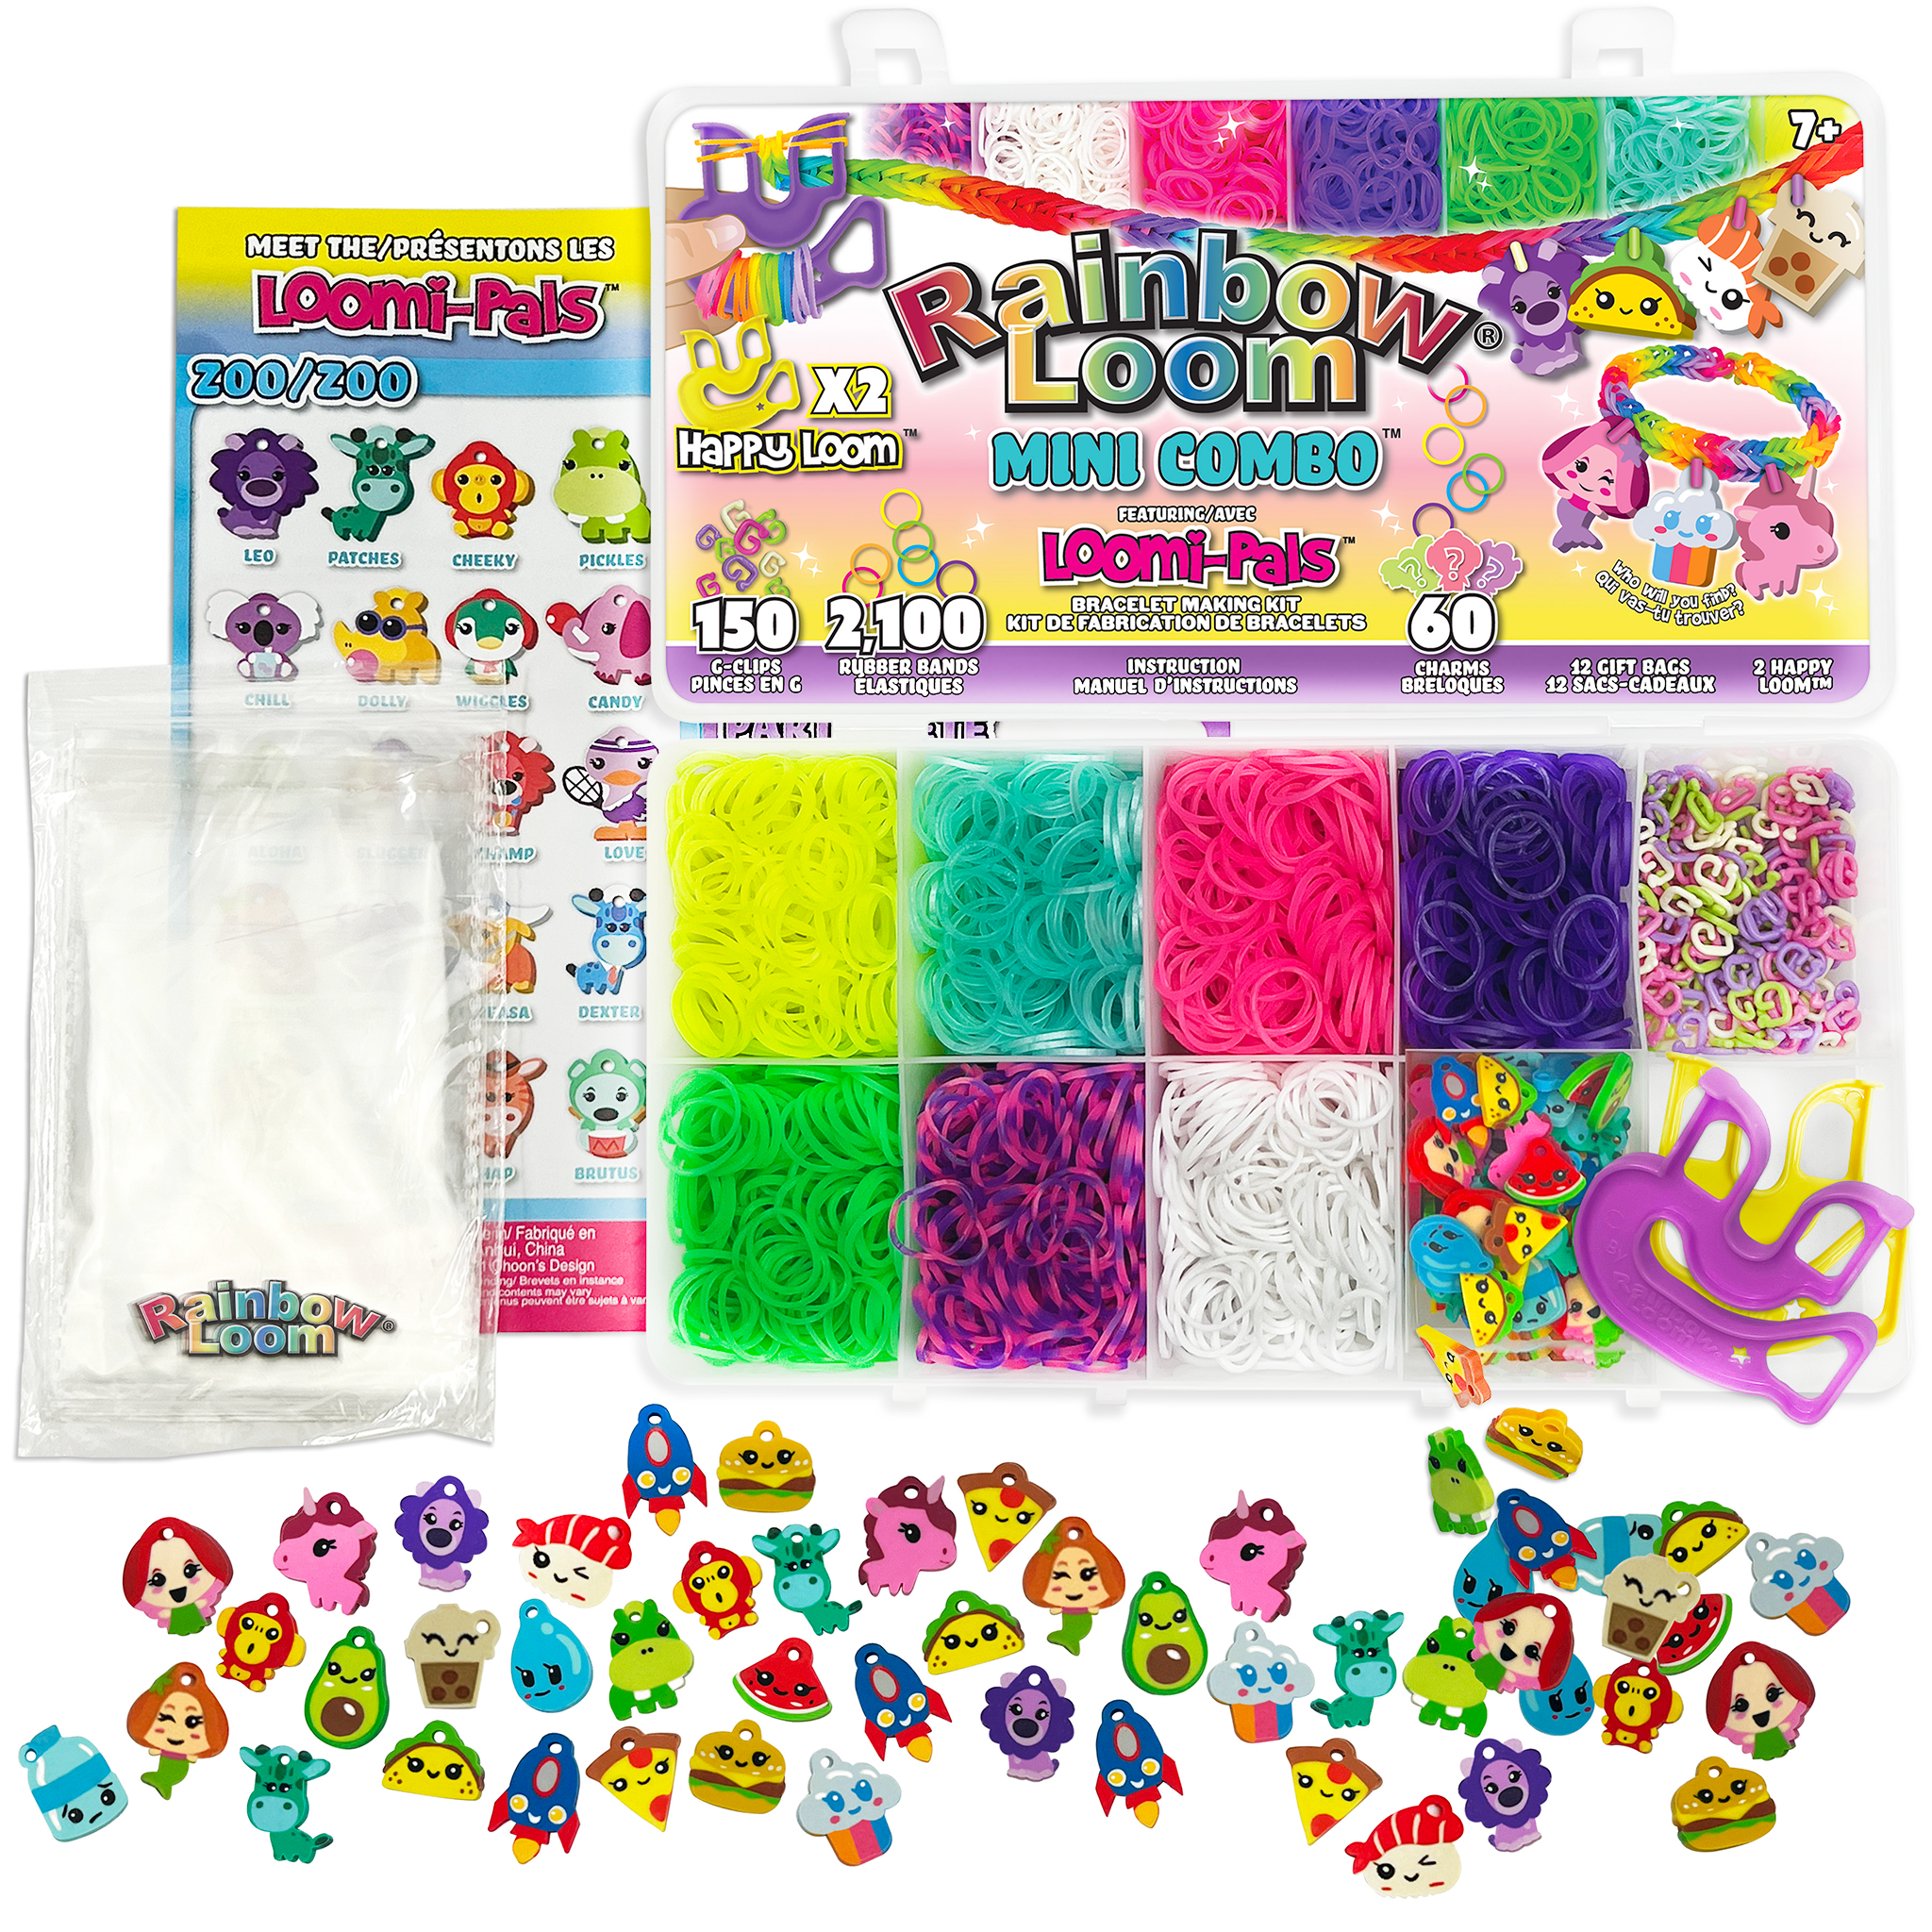 Rainbow Loom Loomi-Pals Mini Combo Set, Features 60 CUTE Assorted Loomi-Pals